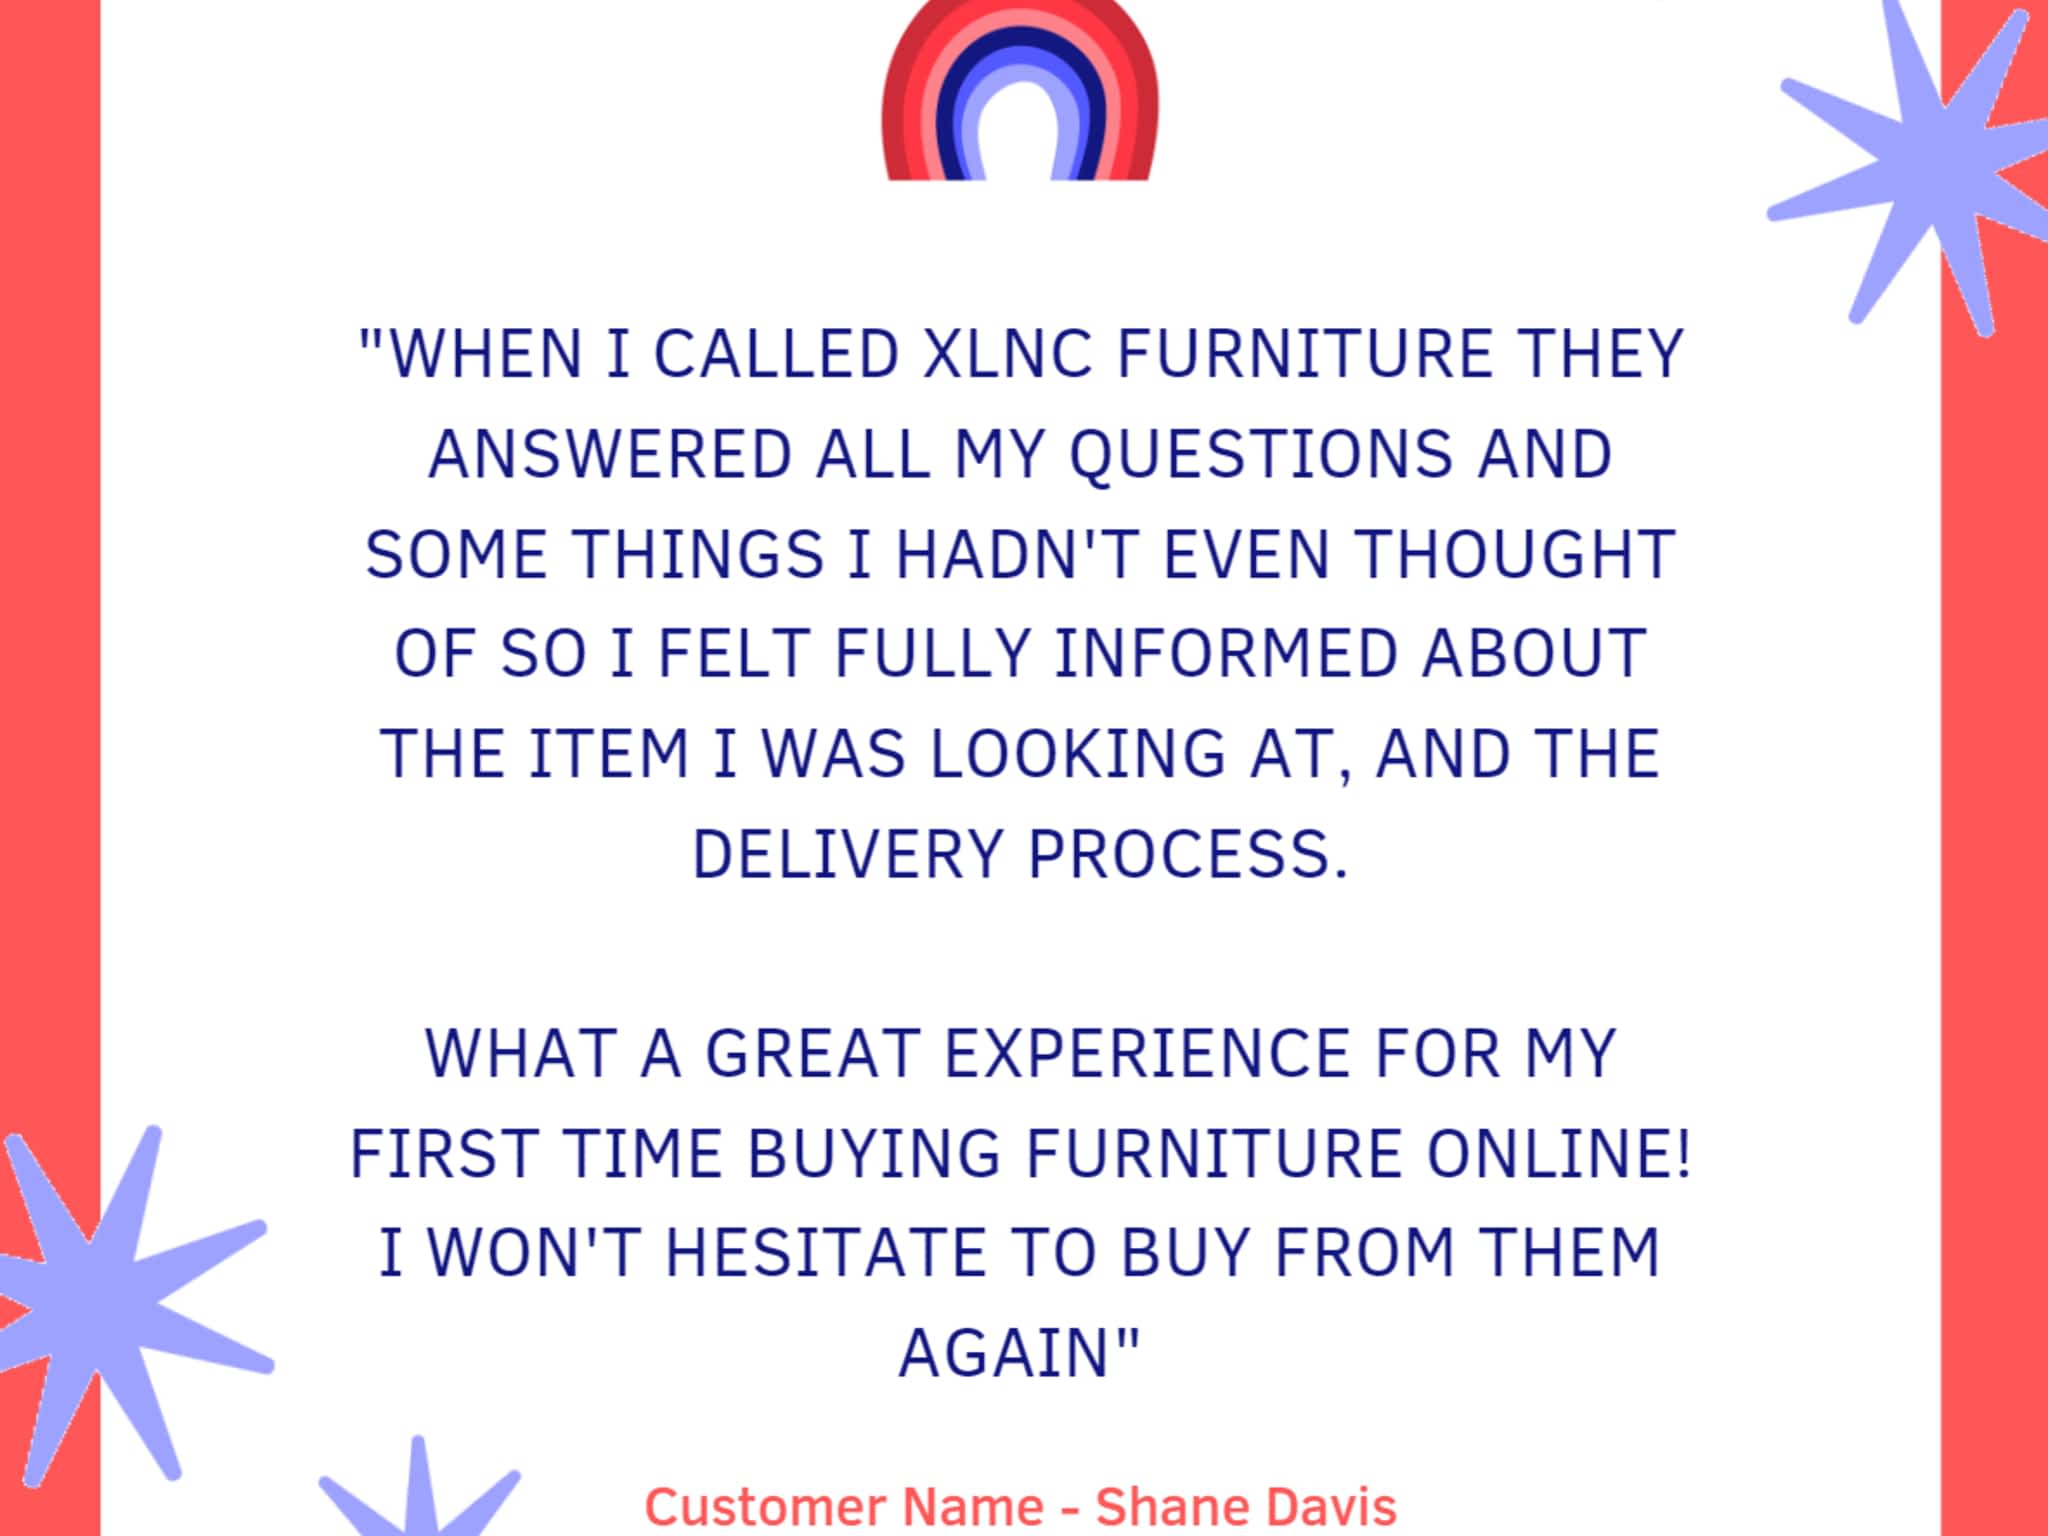 photo XLNC Furniture